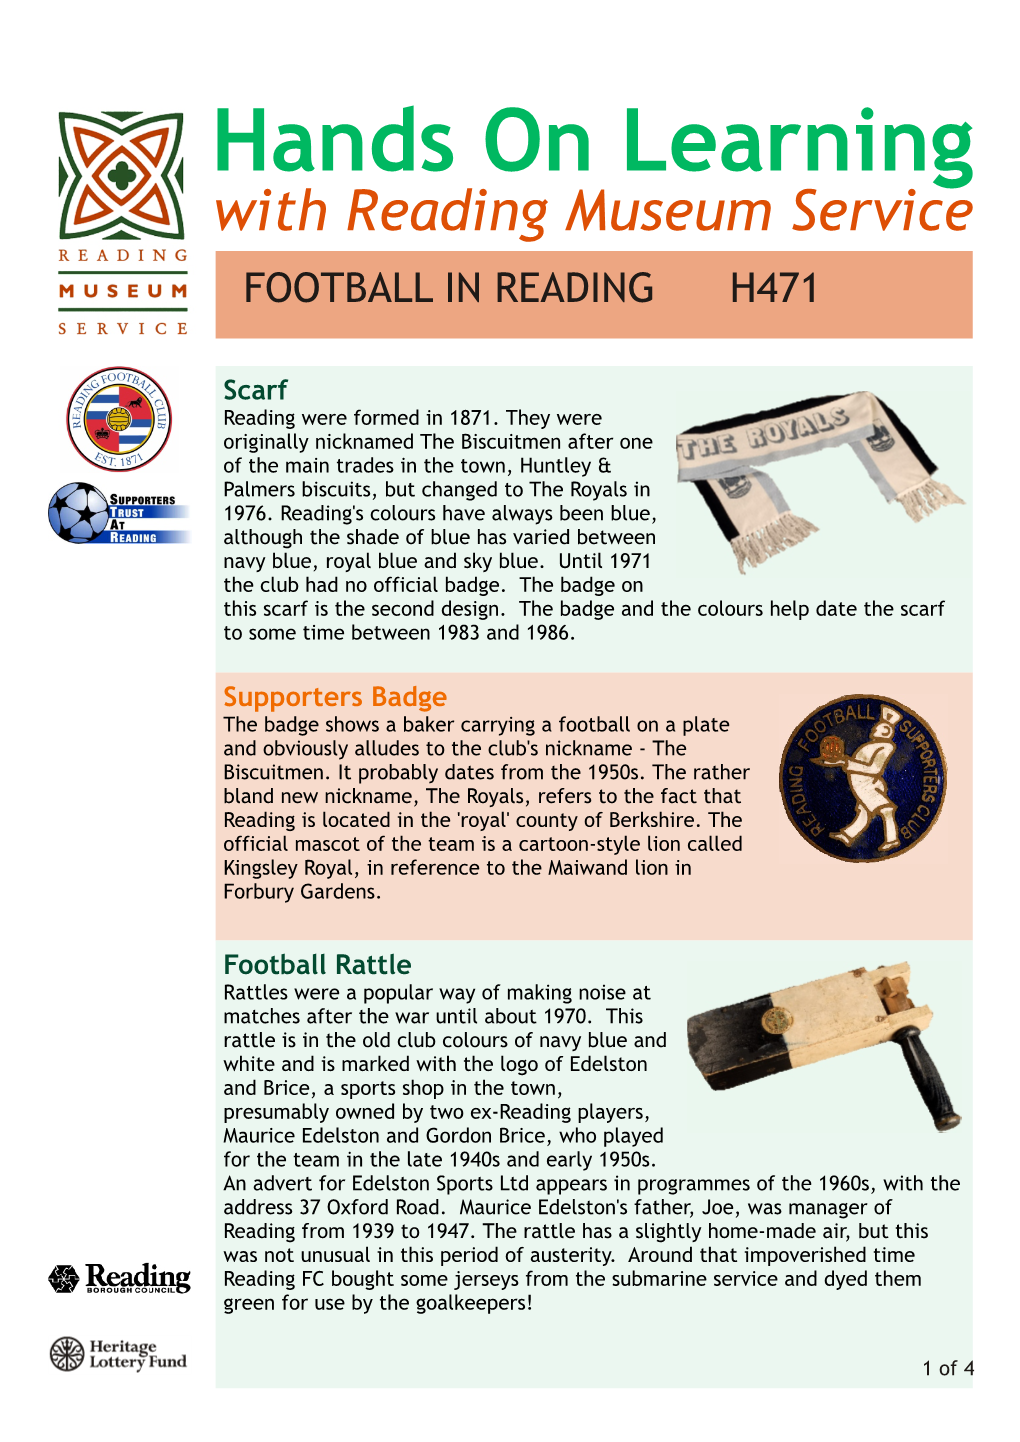 Reading Football Loan Box Can Be